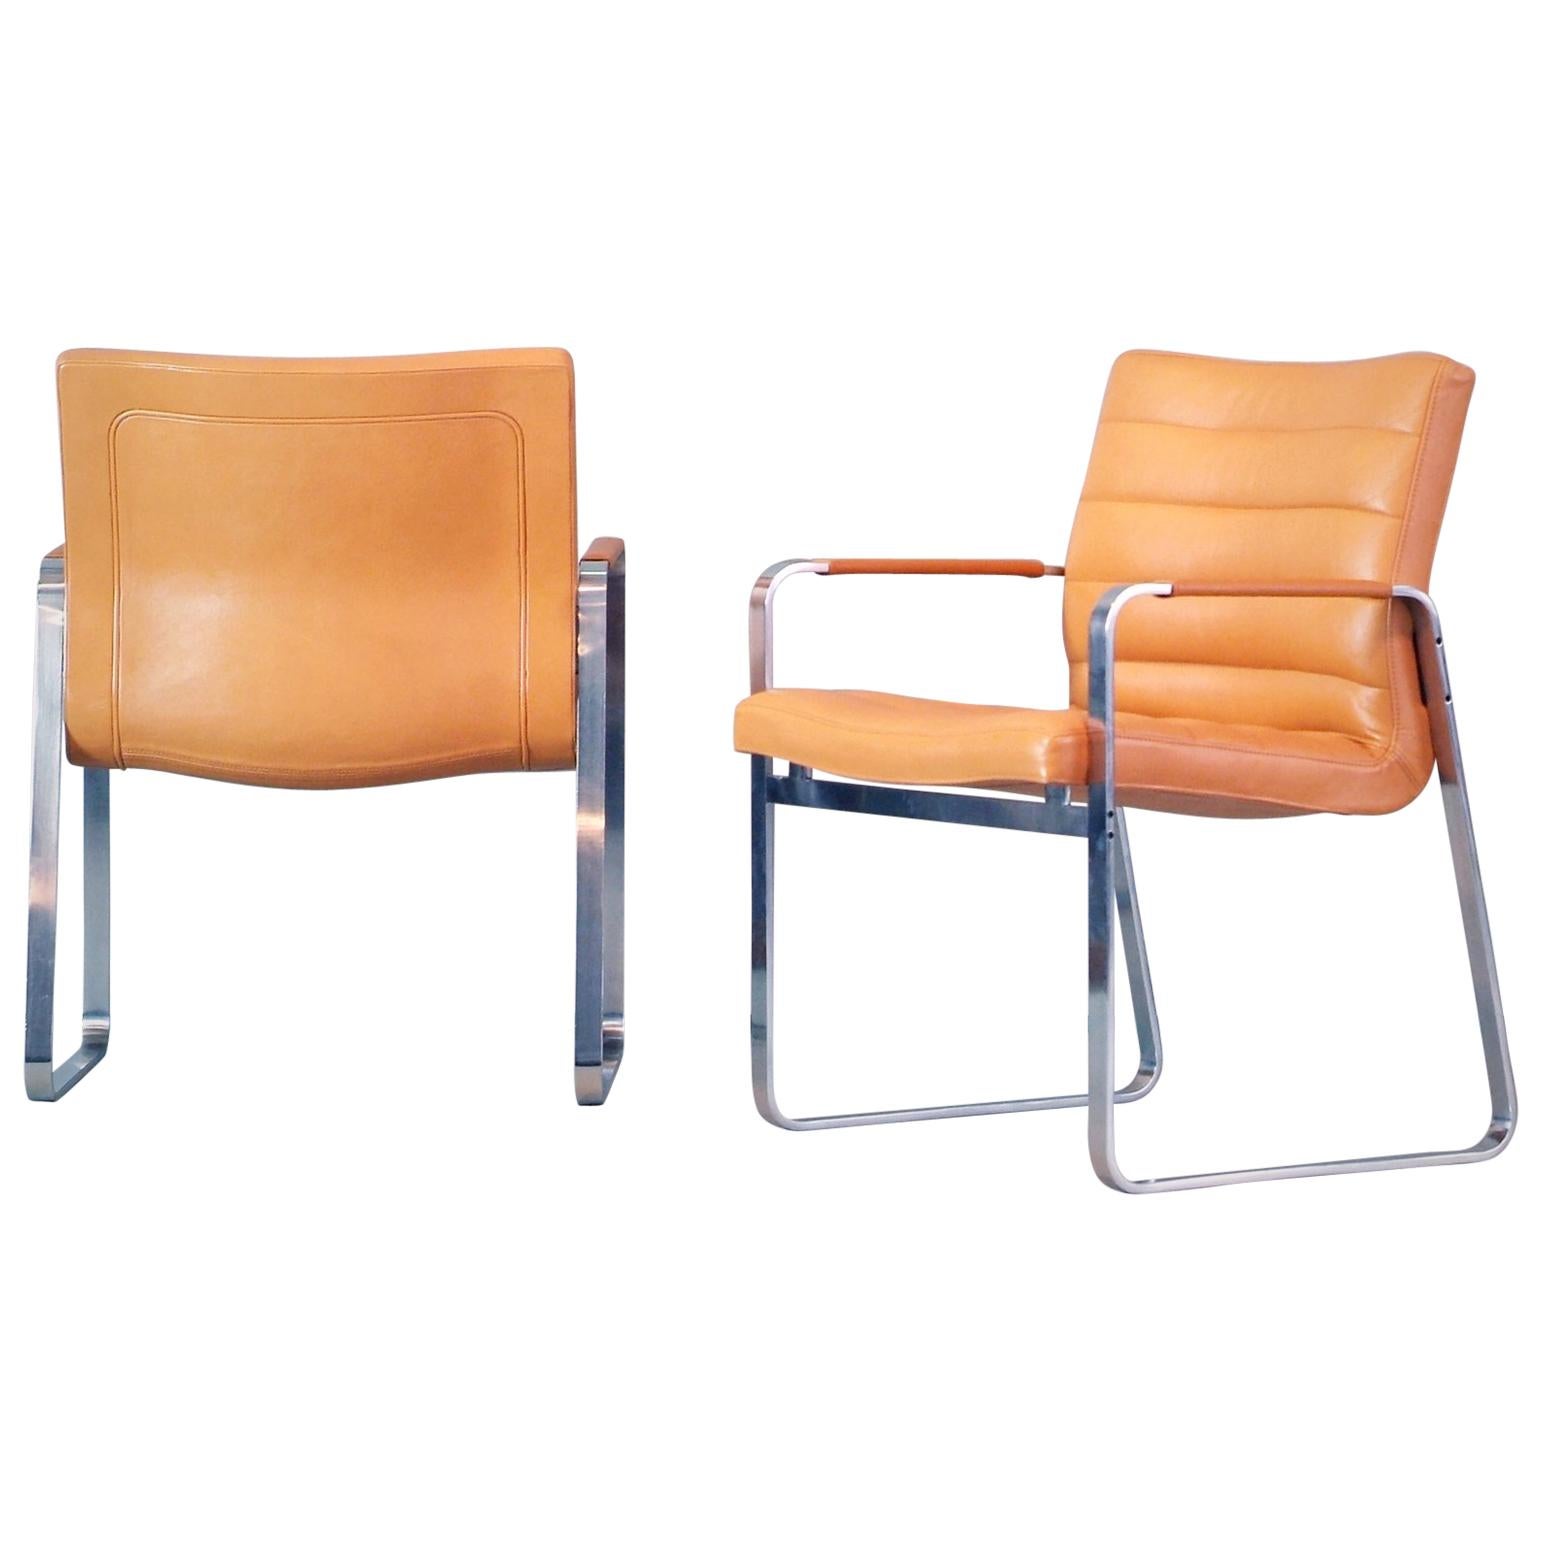 J. Lund & O. Larsen Chairs '2' Bo-Ex Denmark Stell Leather Cognac, 1970s